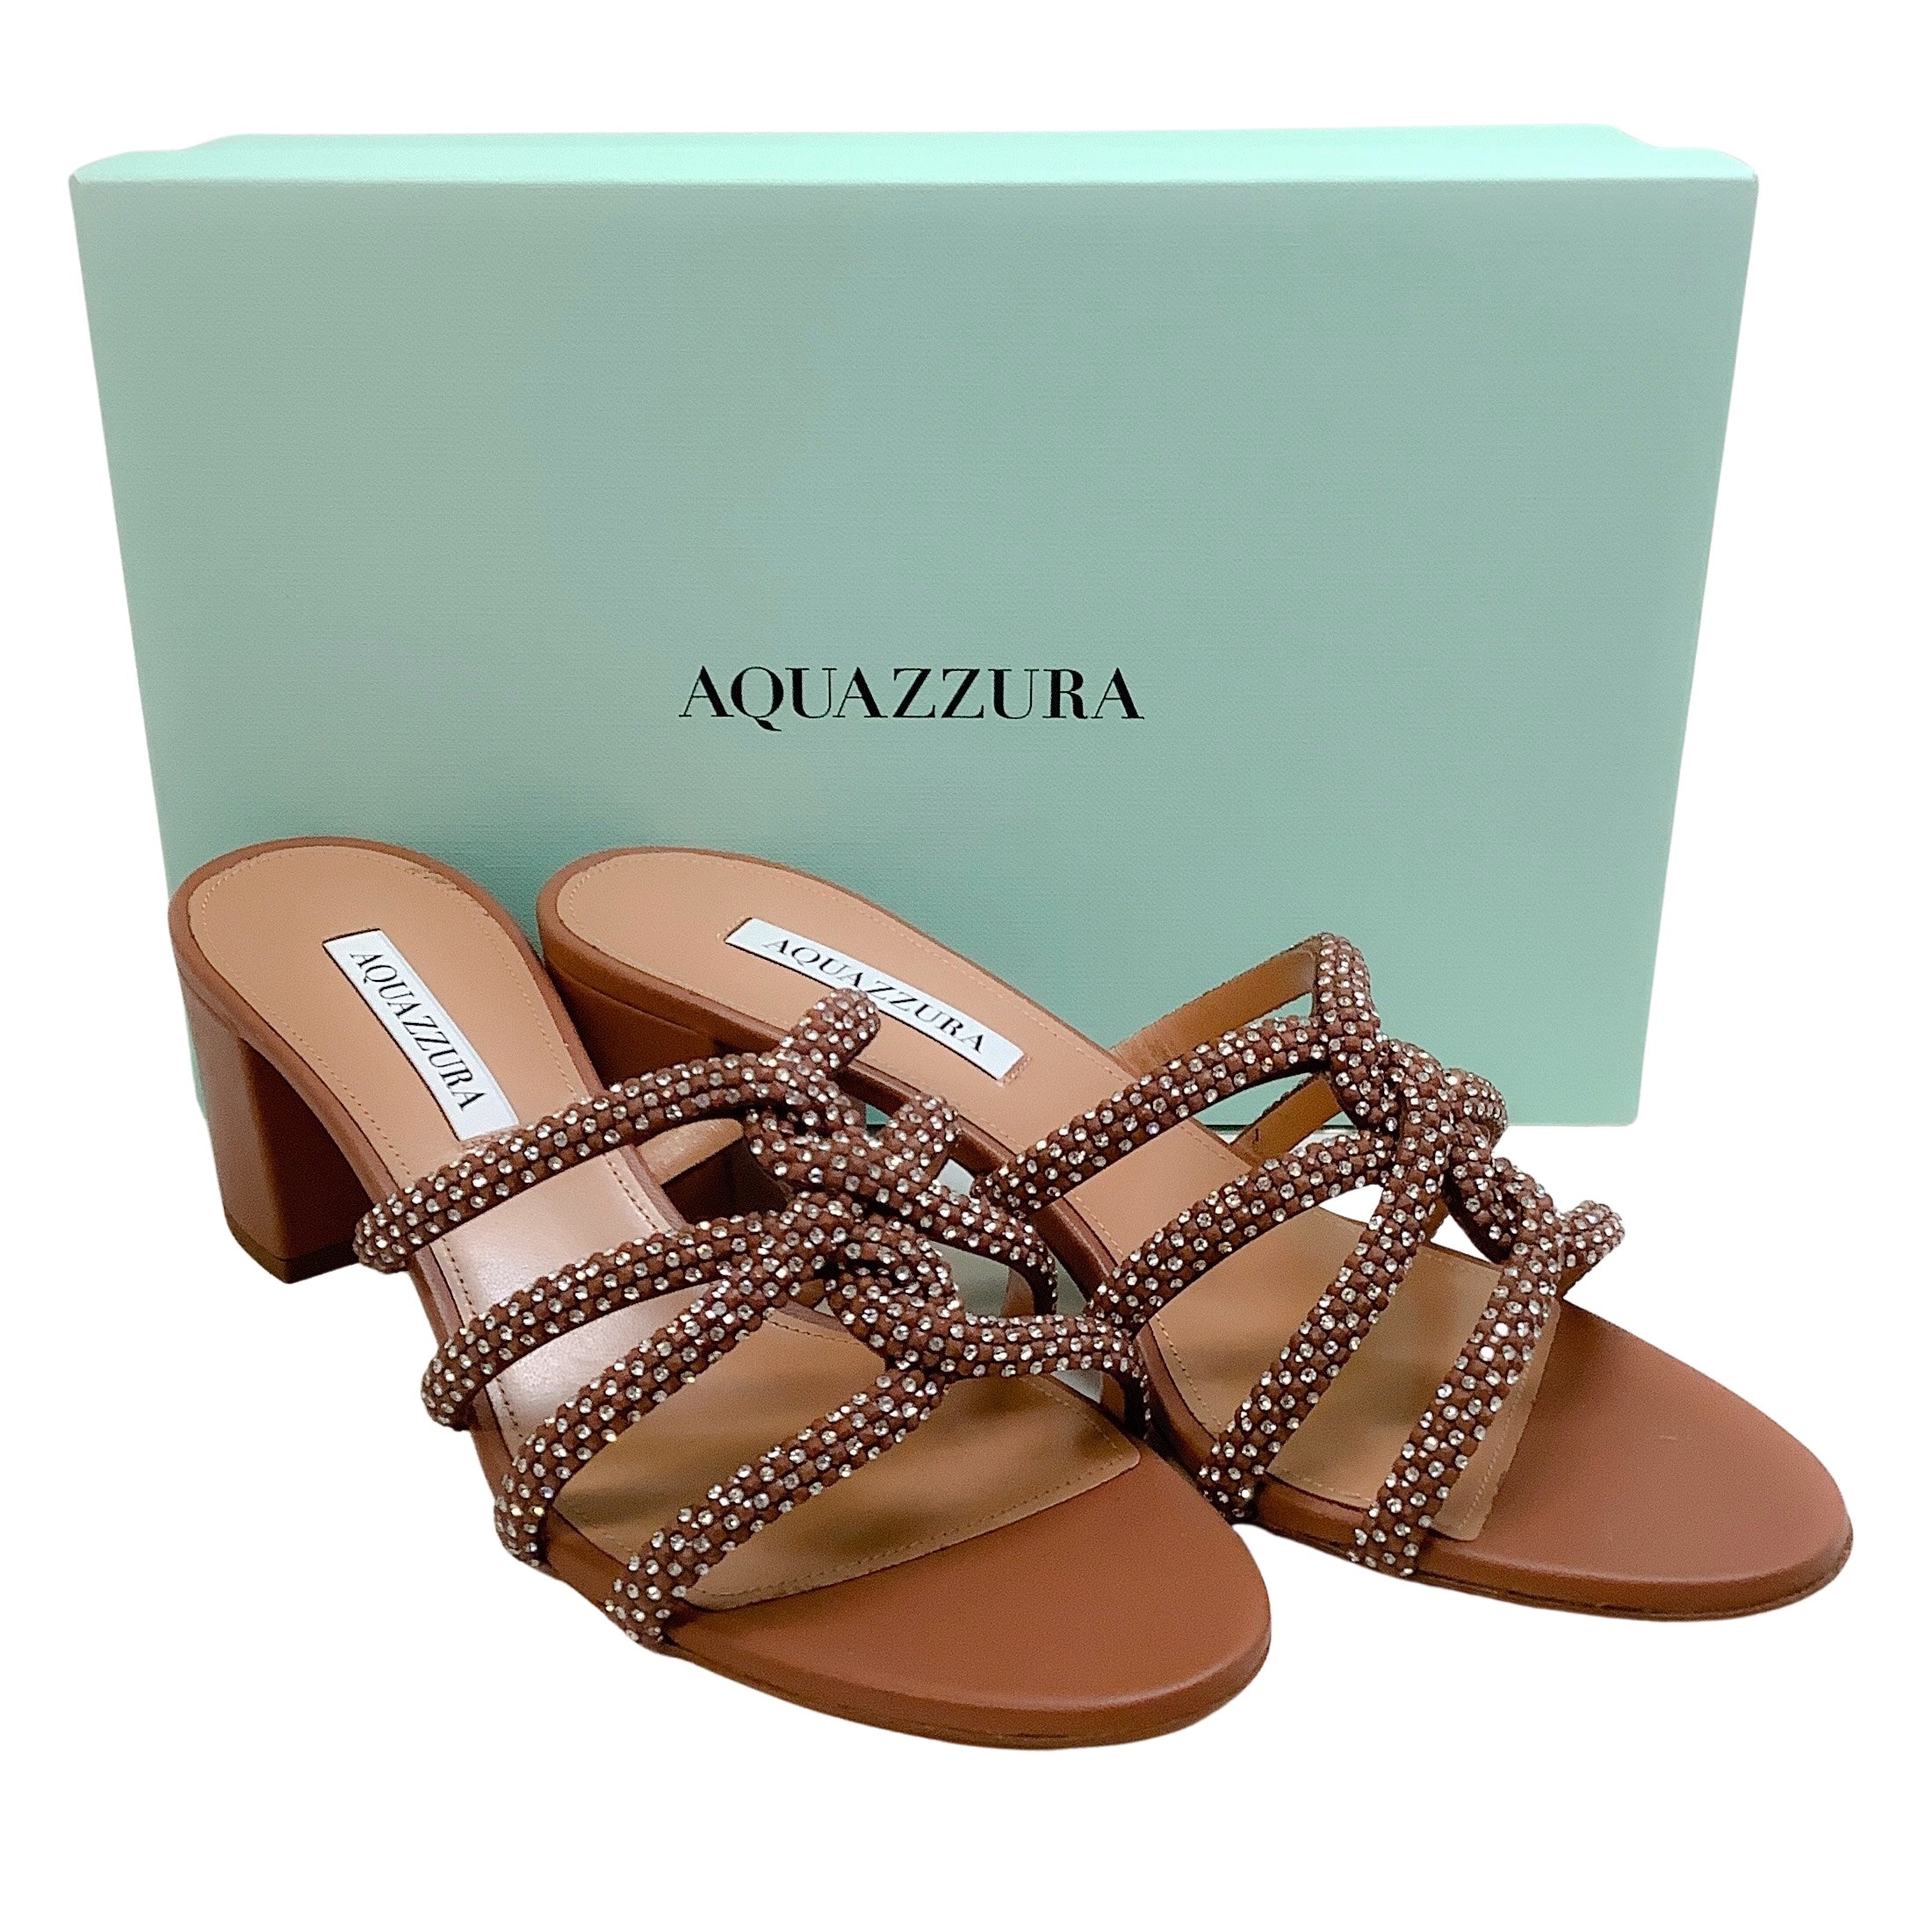 Aquazzura Moondust Twist Sandals with Crystal Ebellishments